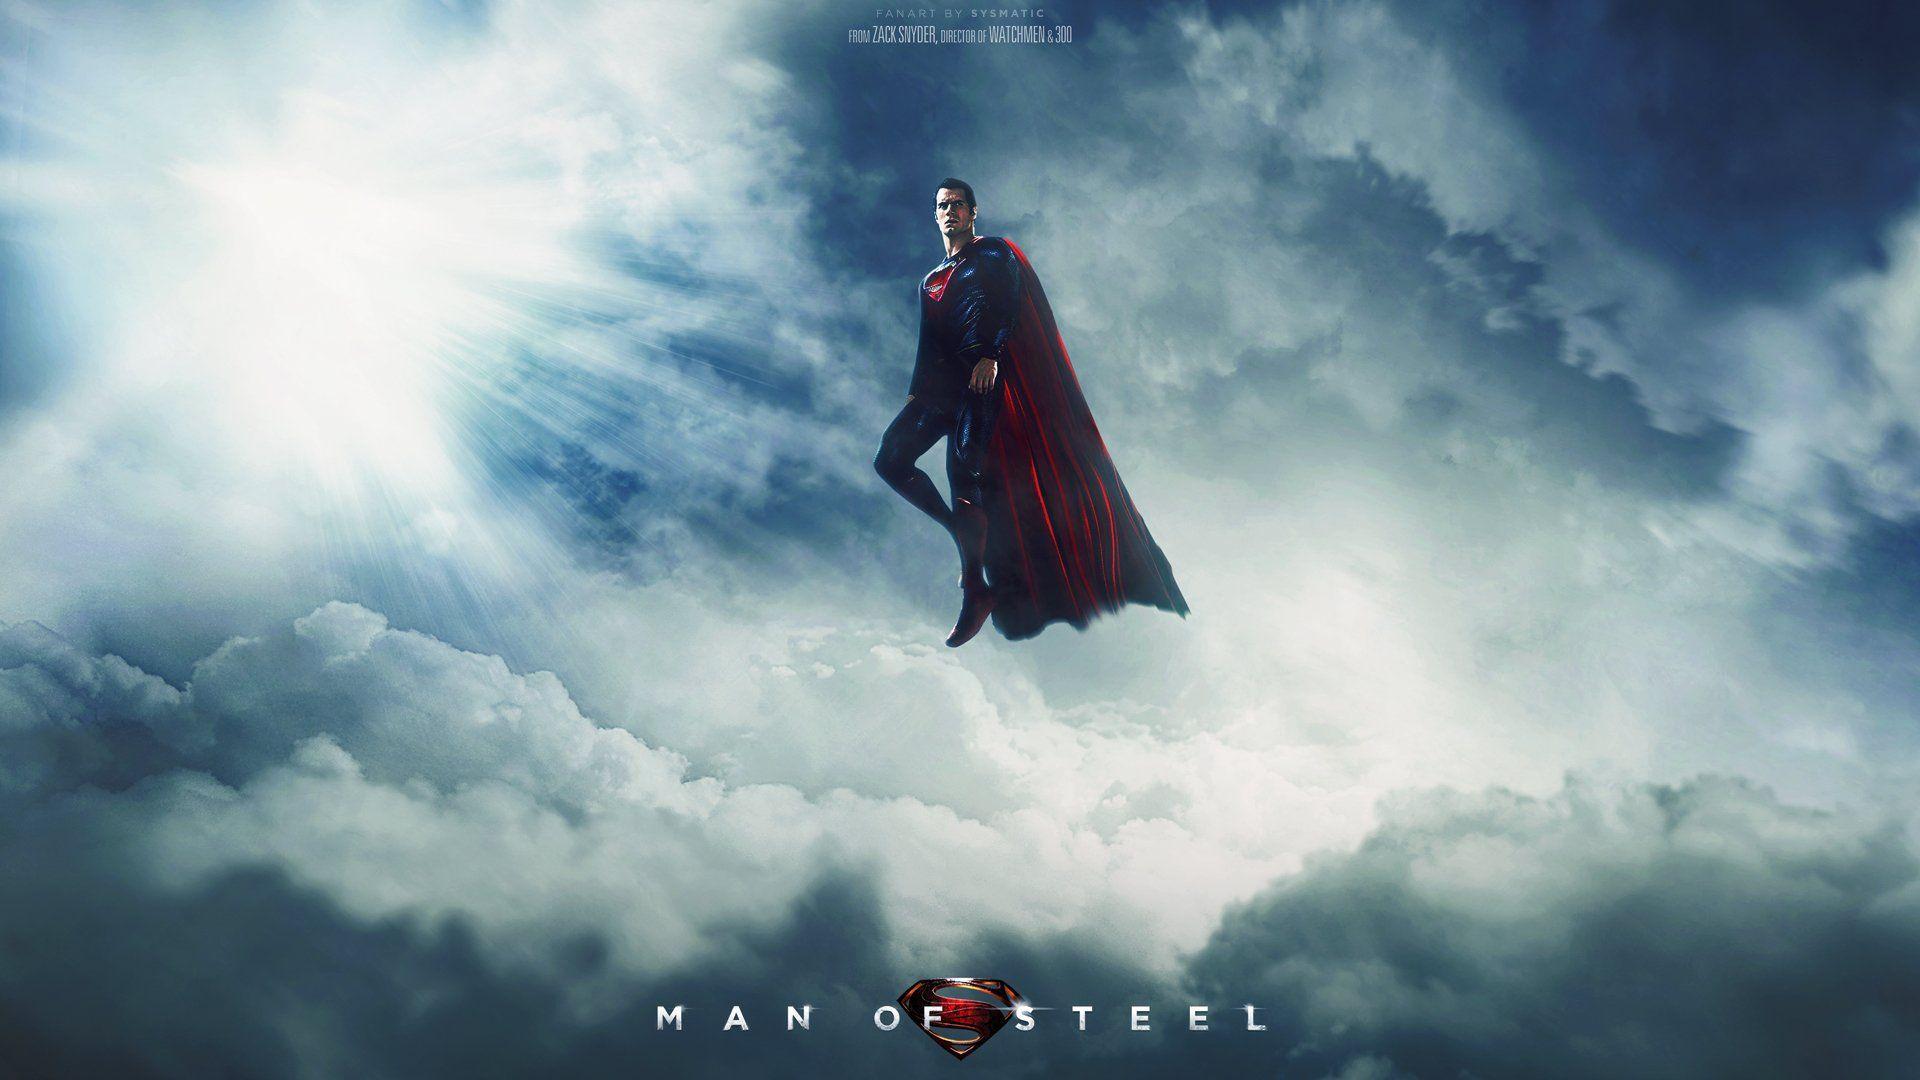 1920x1080 Man Of Steel Wallpaper Superman Movie 03. DigitalArt.io